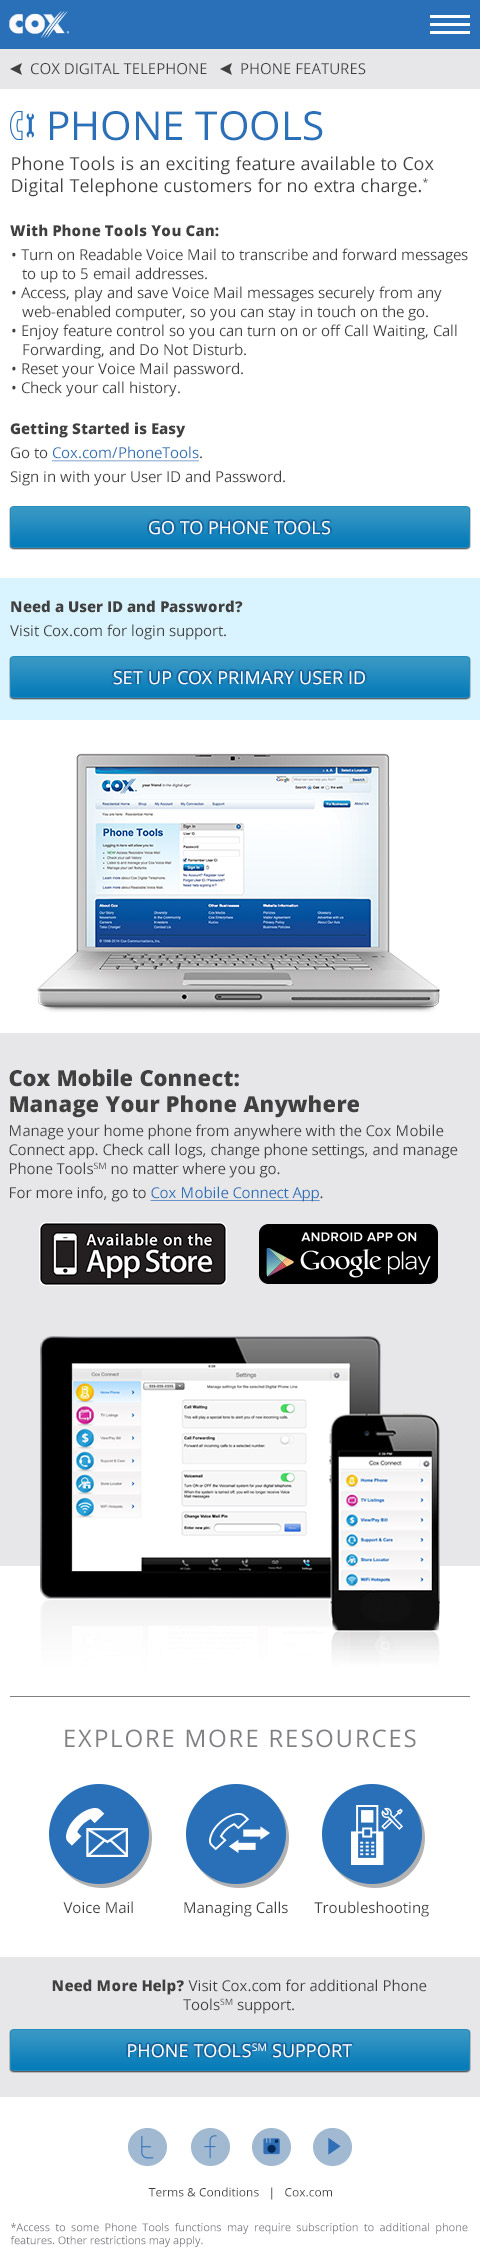 WelcomeCenter_Phone_Features_PhoneTools_Mobile.jpg